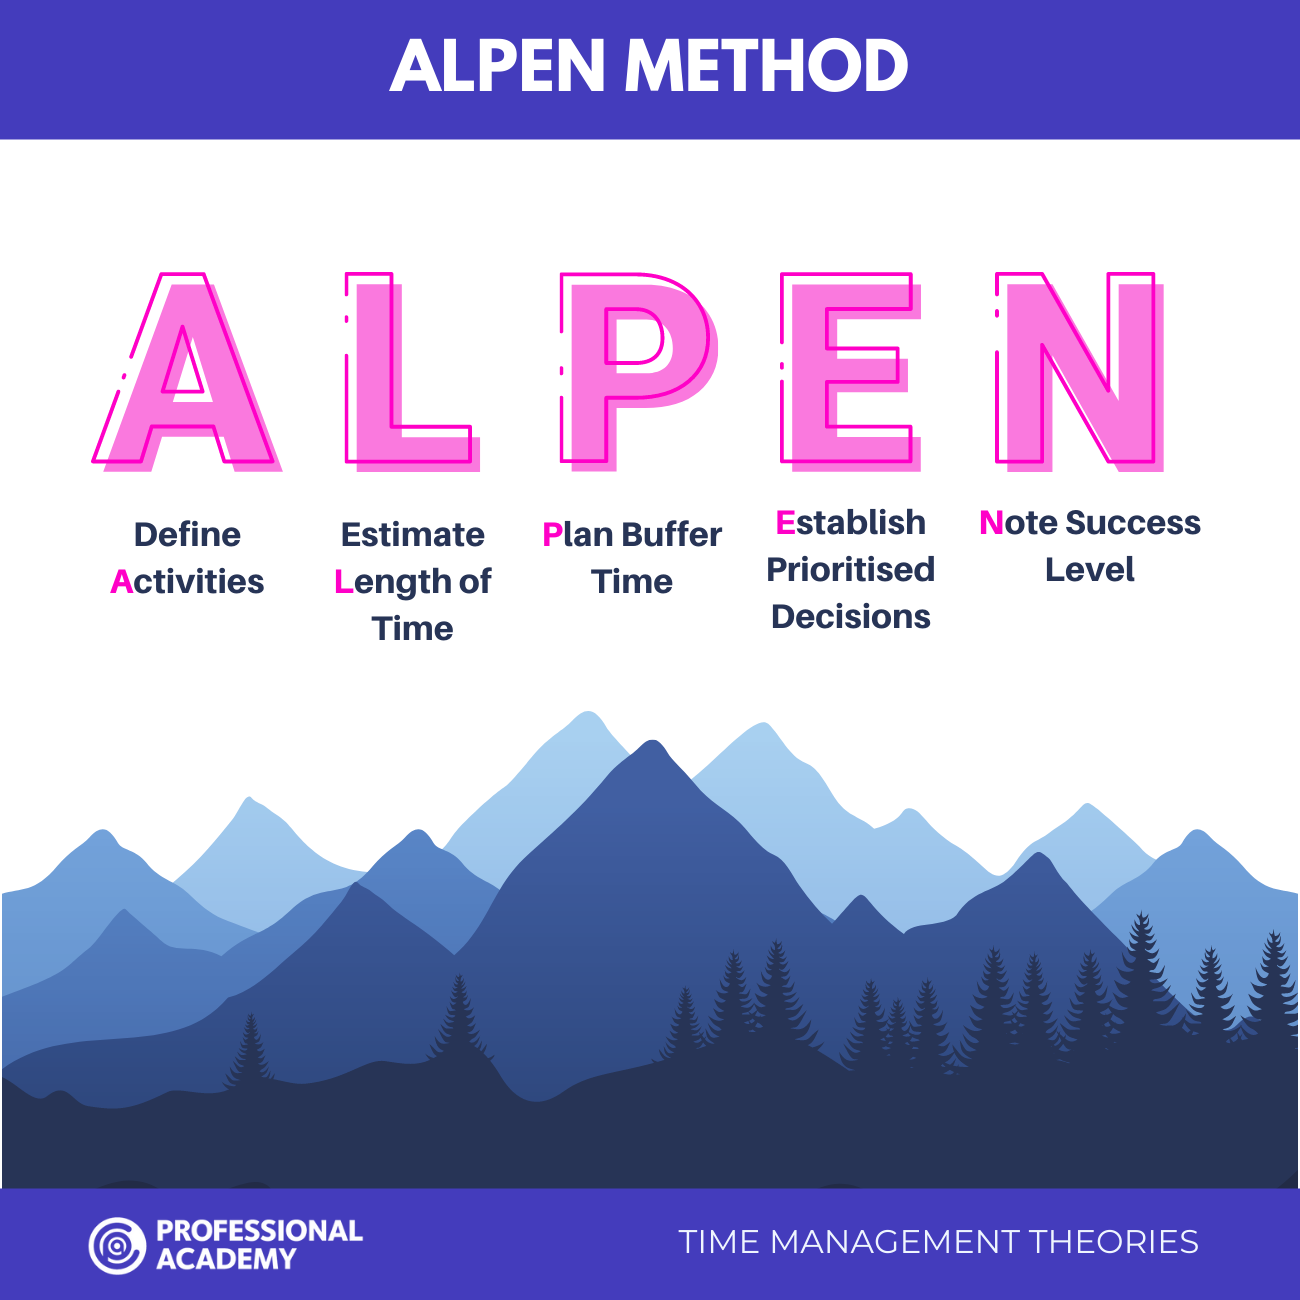 Alpen method time management